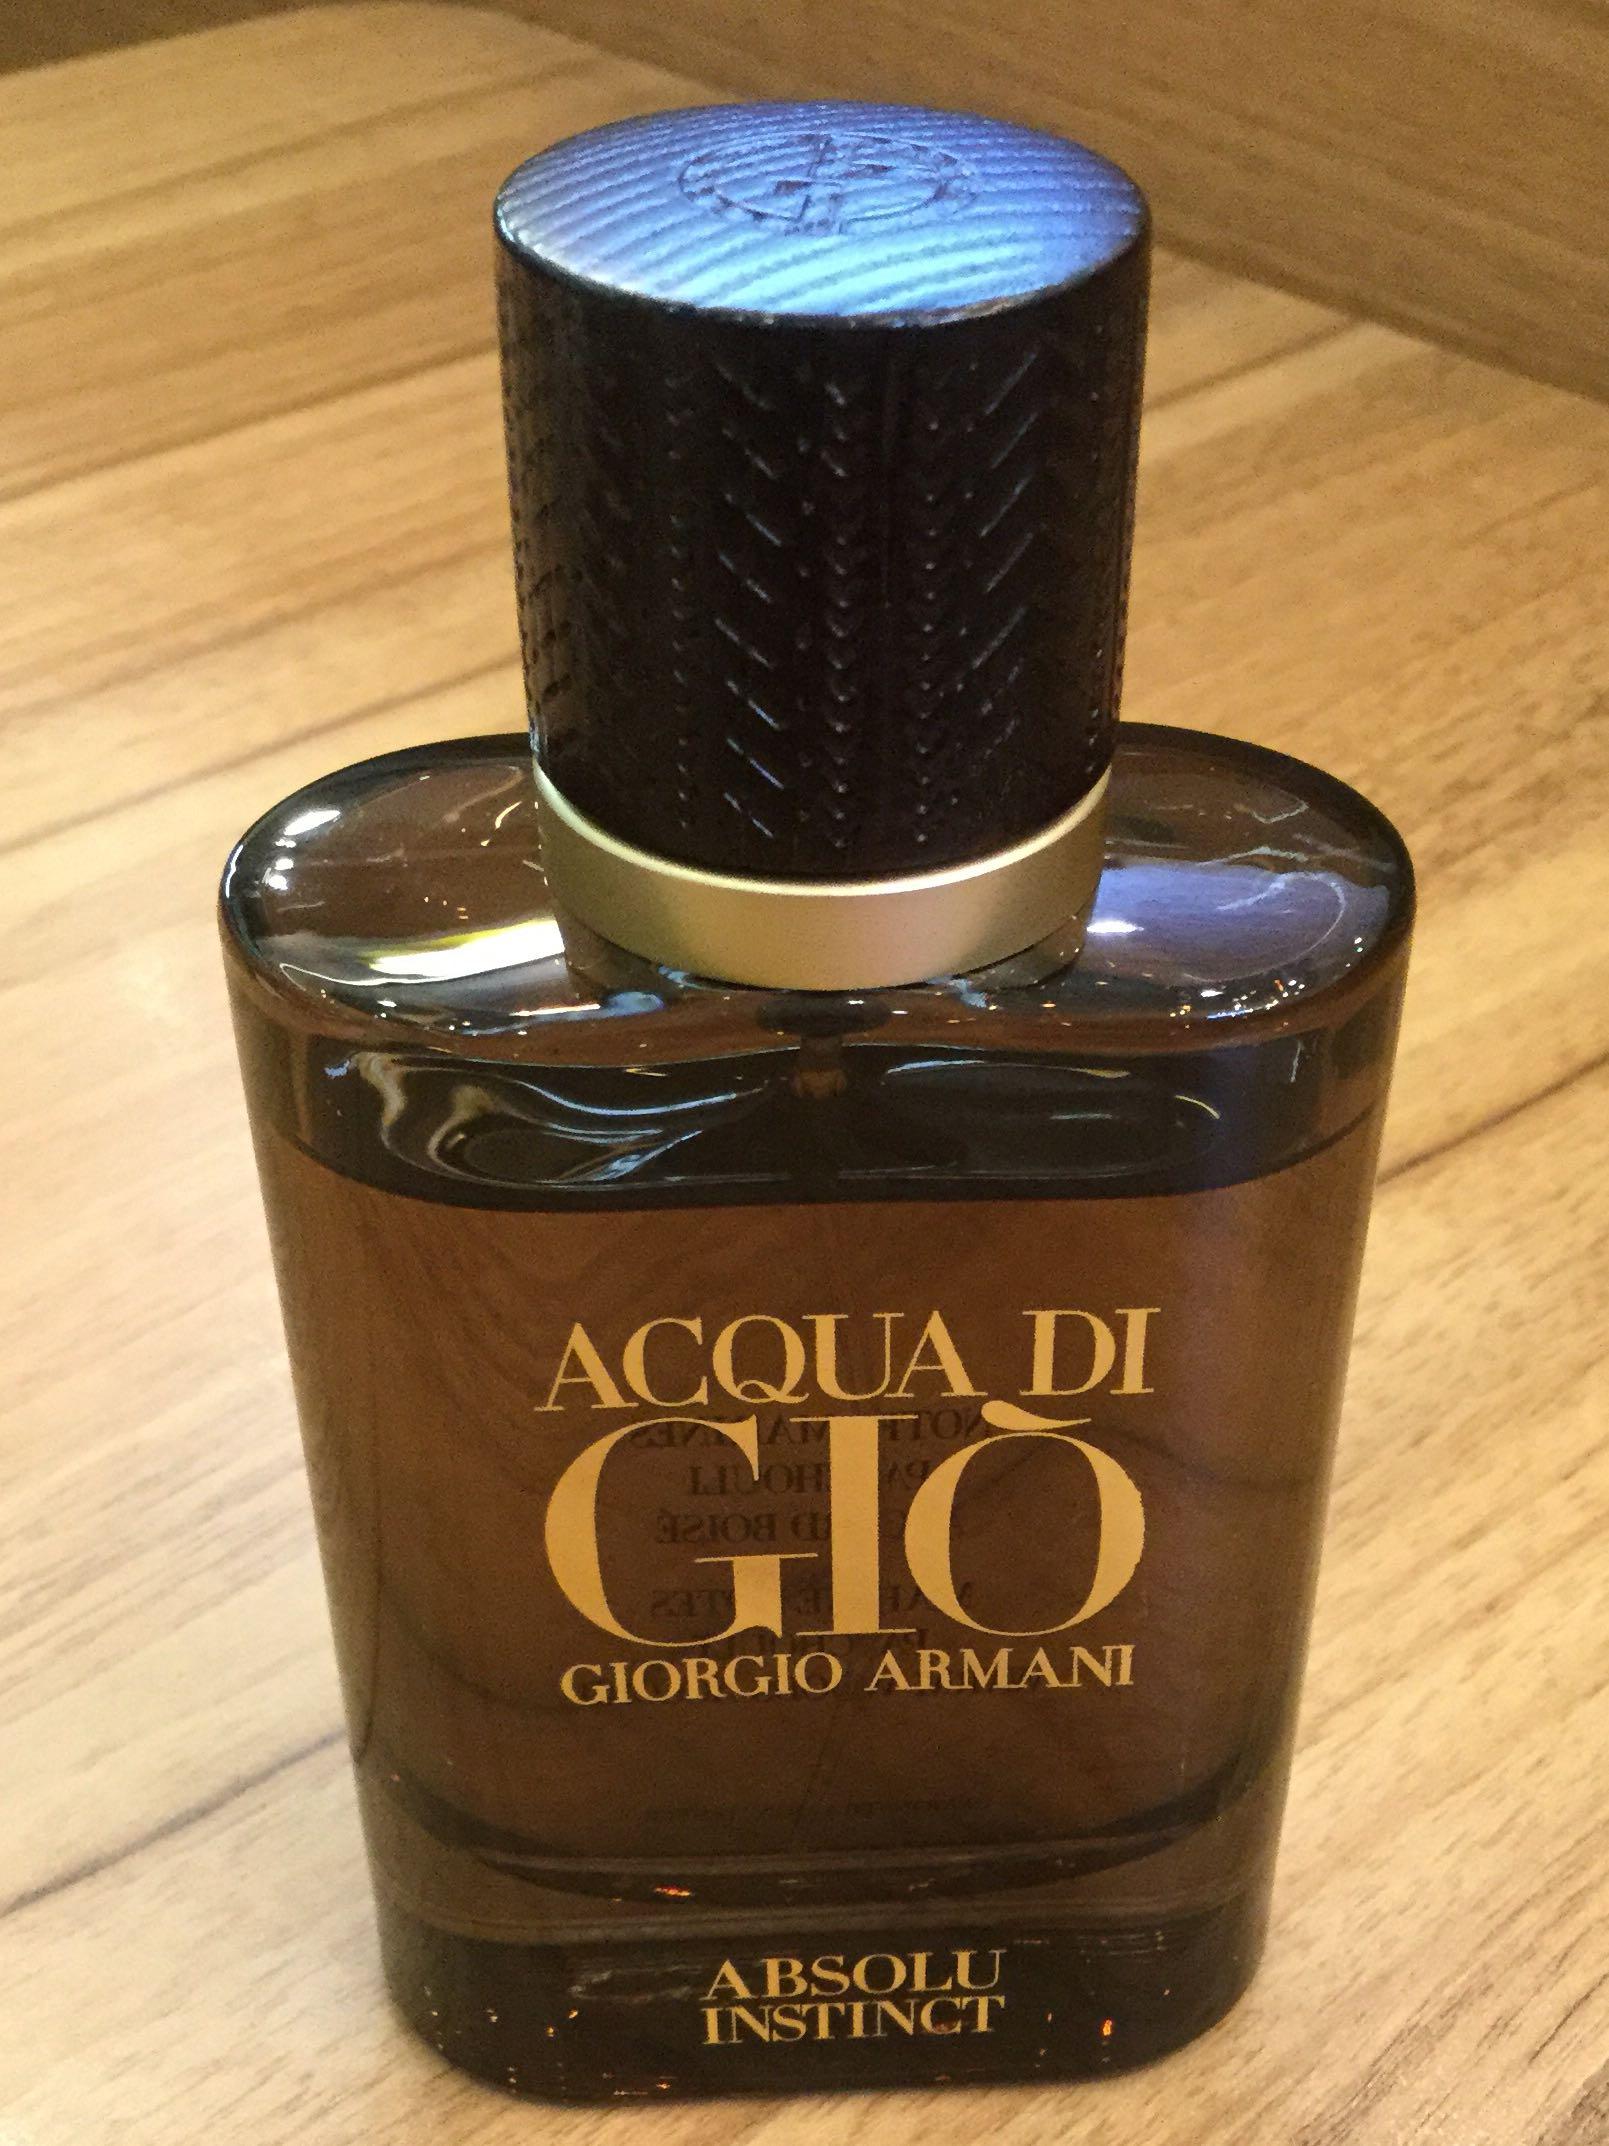 Giorgio Armani Acqua Di Gio Absolu Instinct Cheaper Than Retail Price Buy Clothing Accessories And Lifestyle Products For Women Men